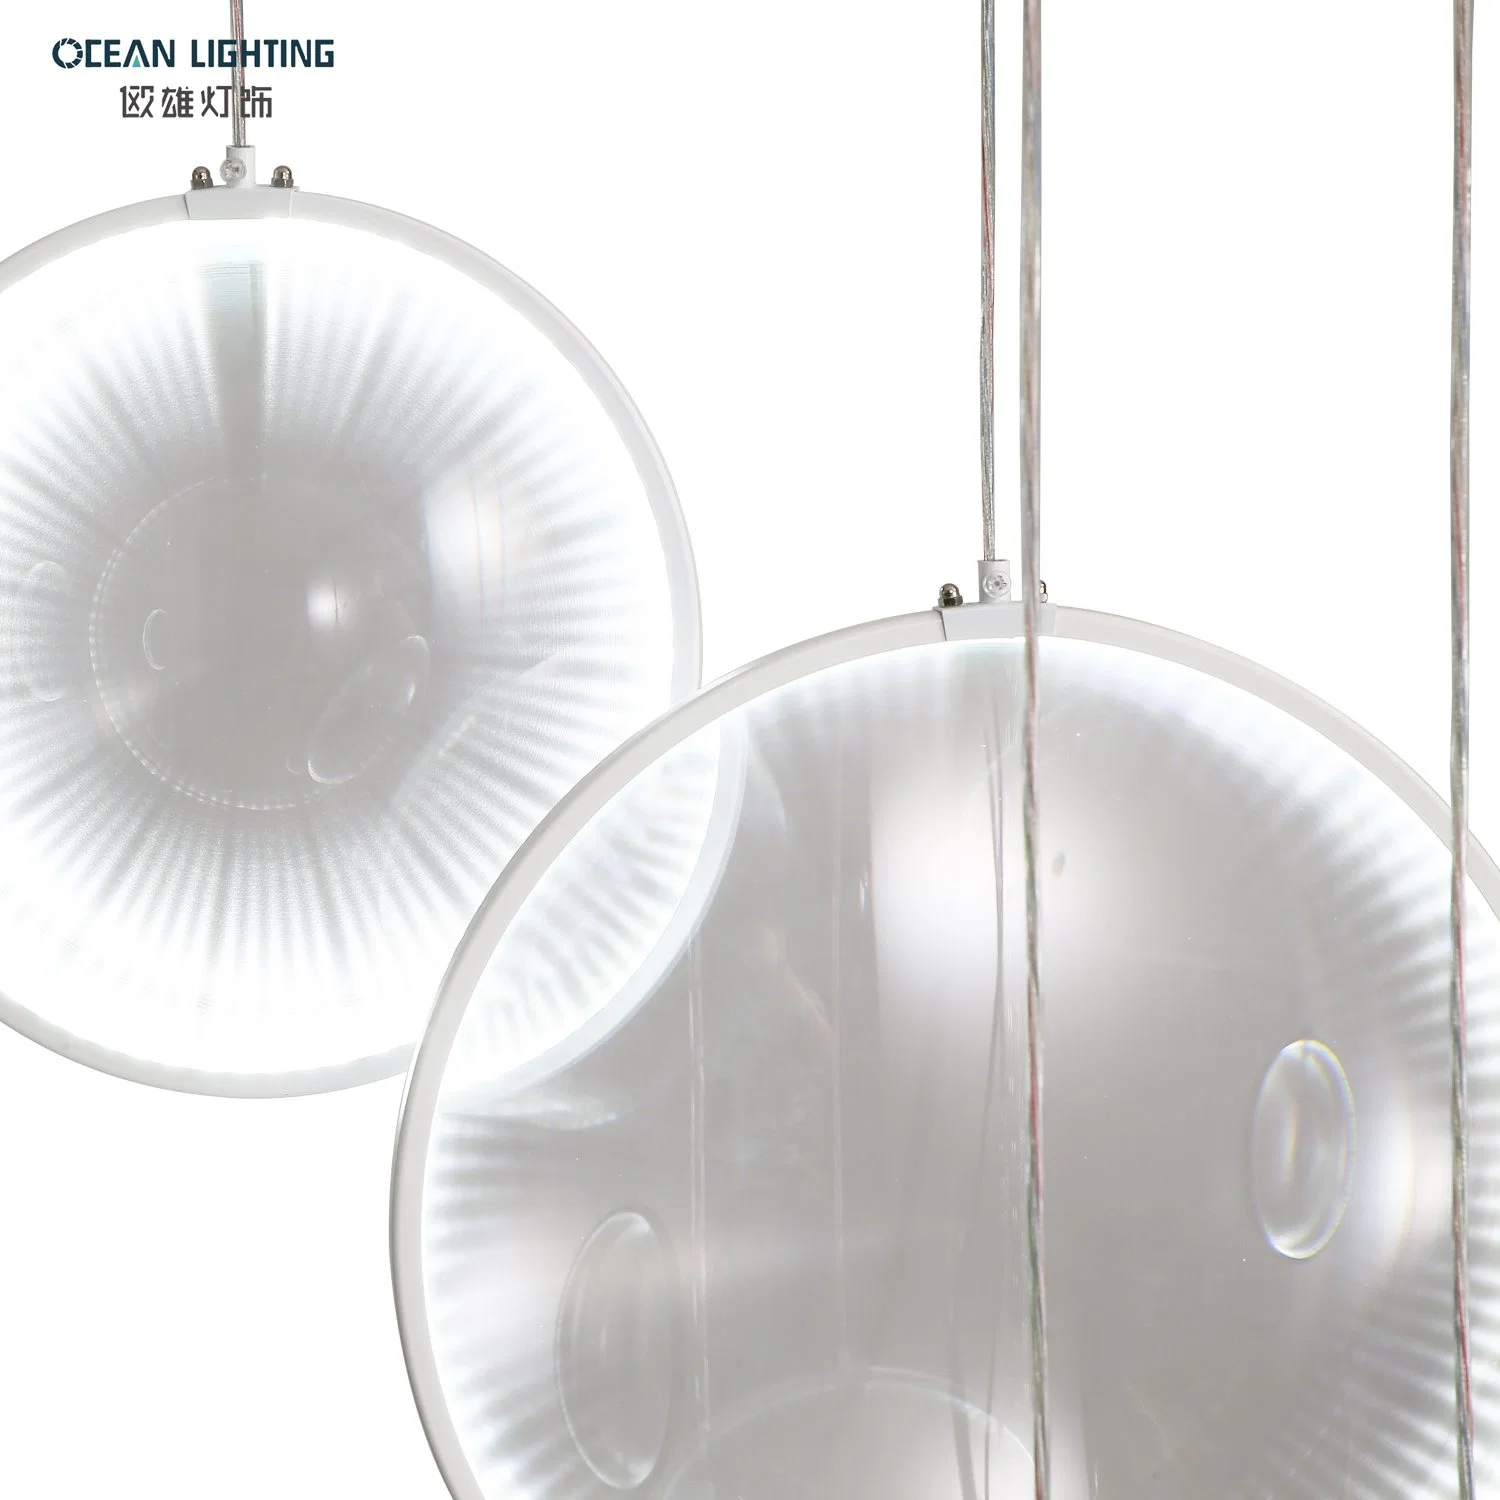 Ocean Lighting Wholesal Living Room Lights Acrylic Hanging Pendant Lamp